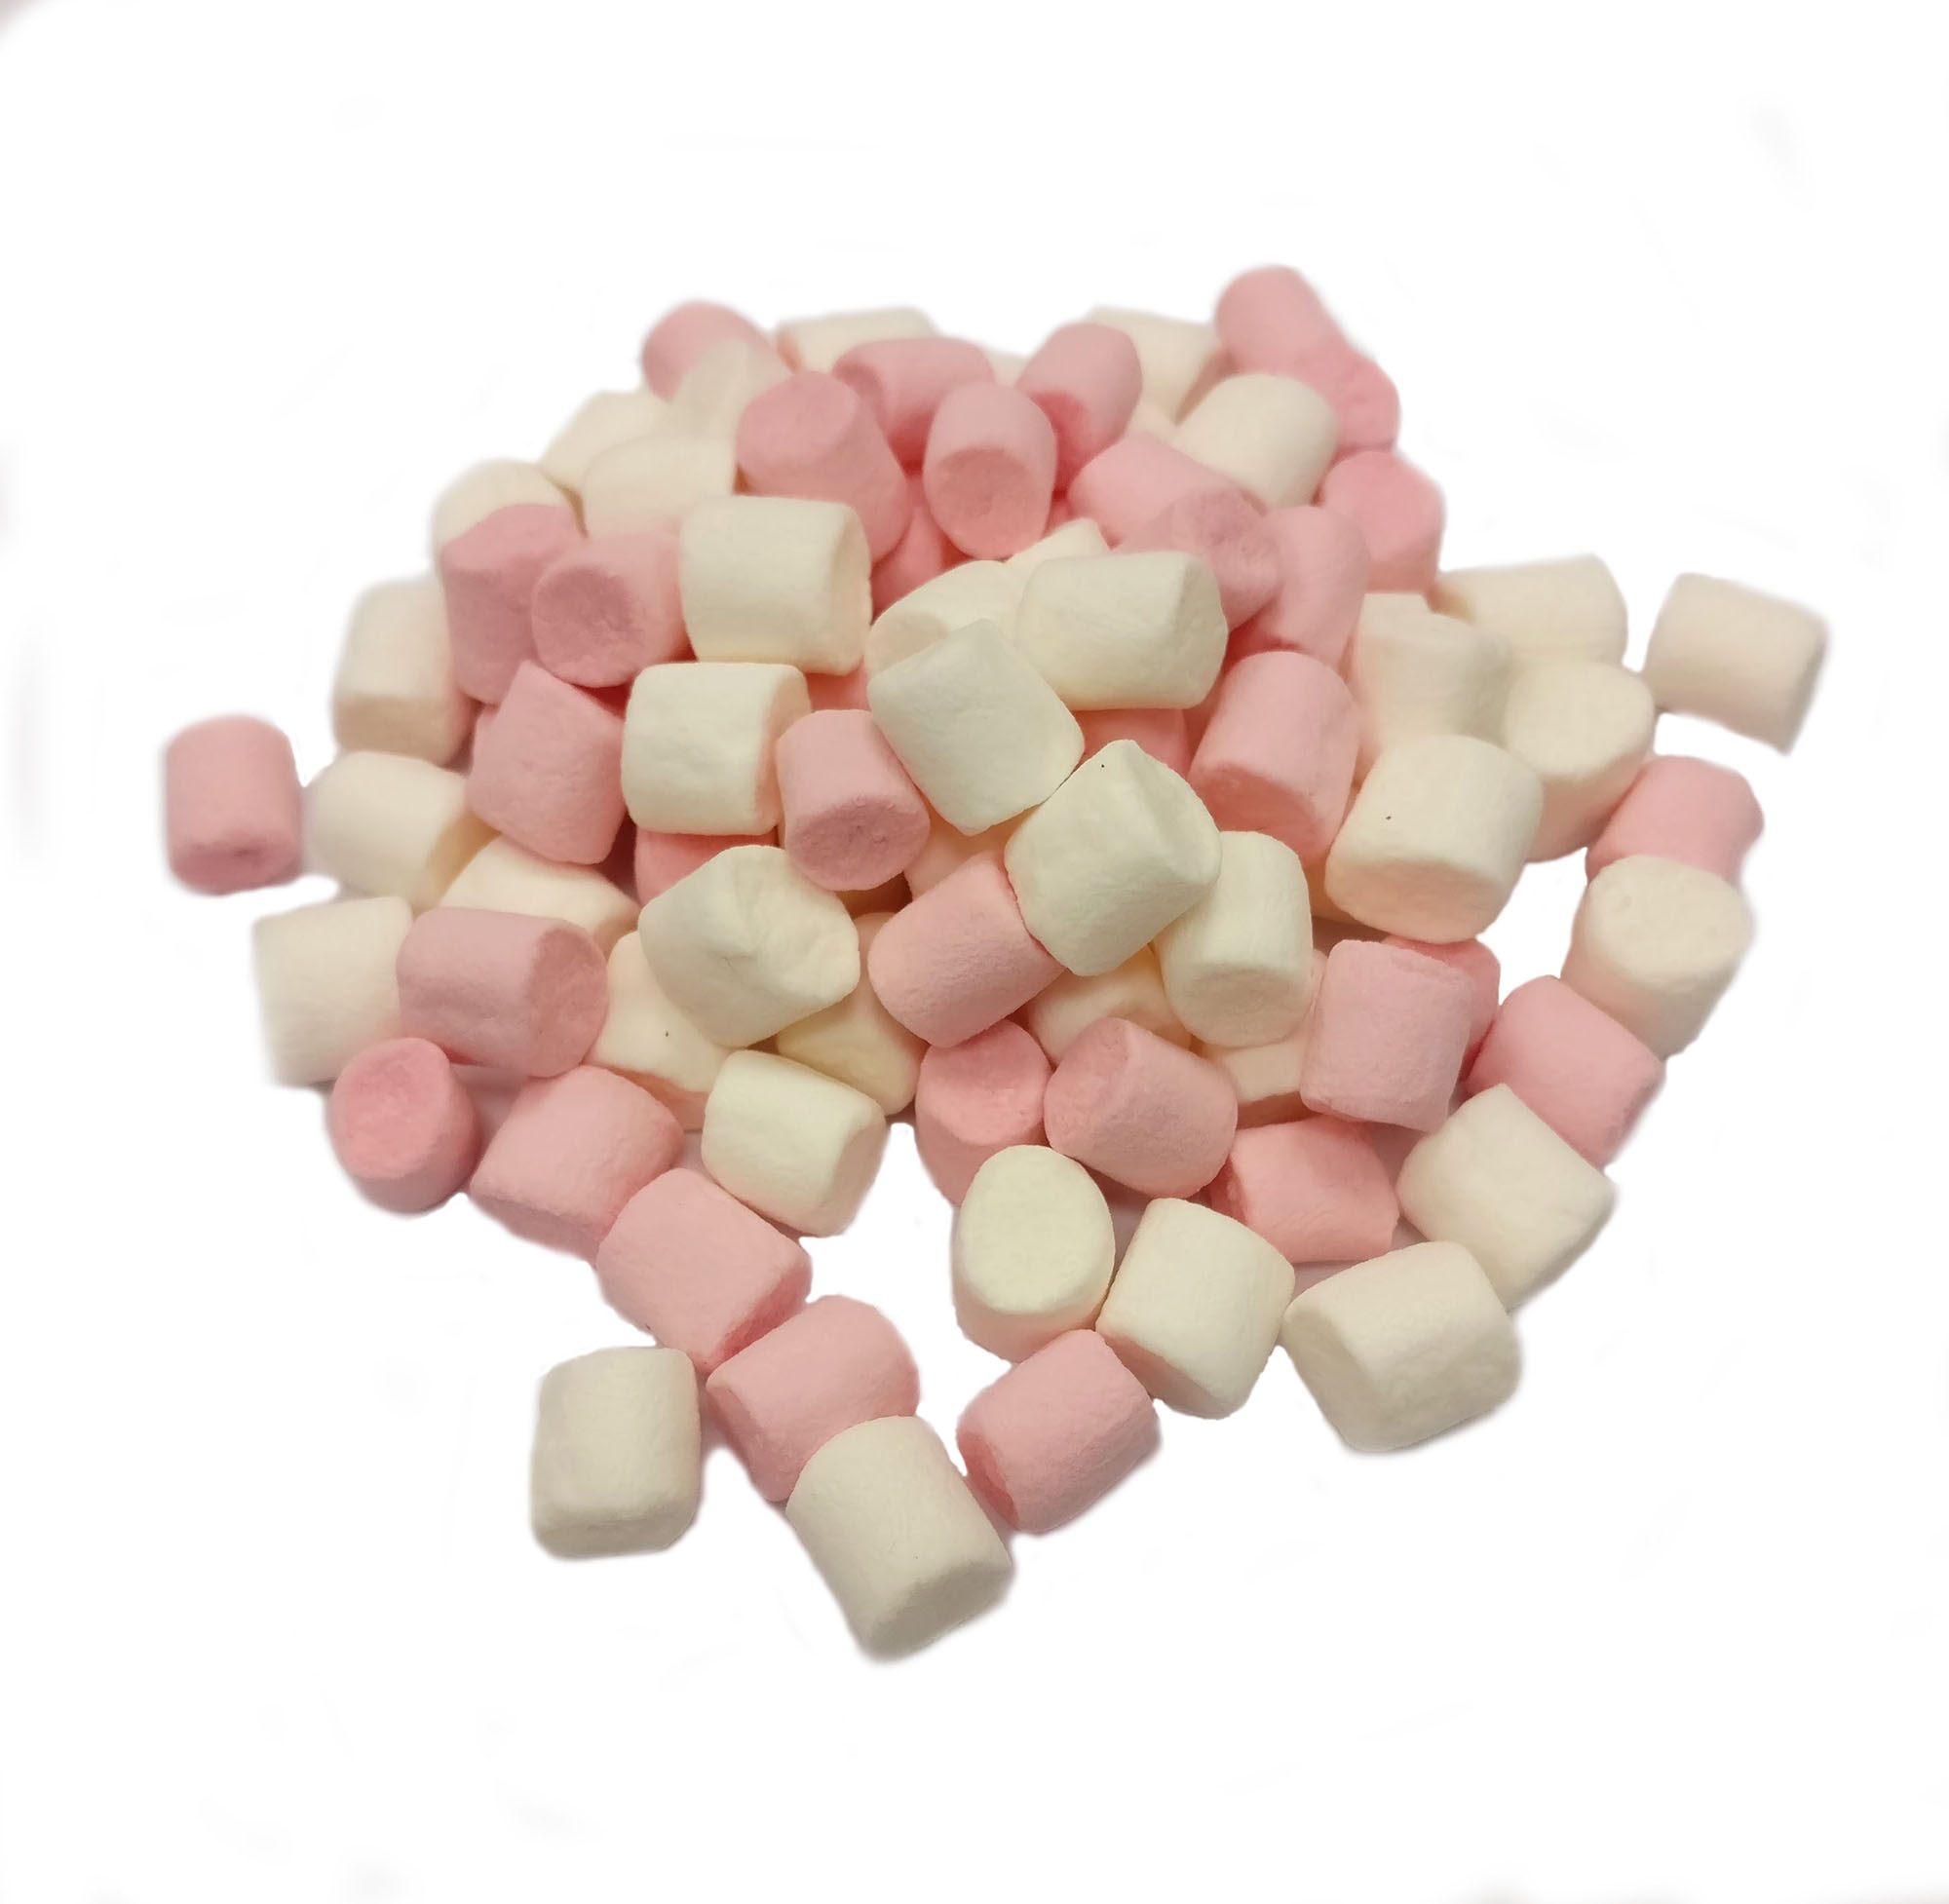 Simply Mini White Marshmallows, Simply Toppings